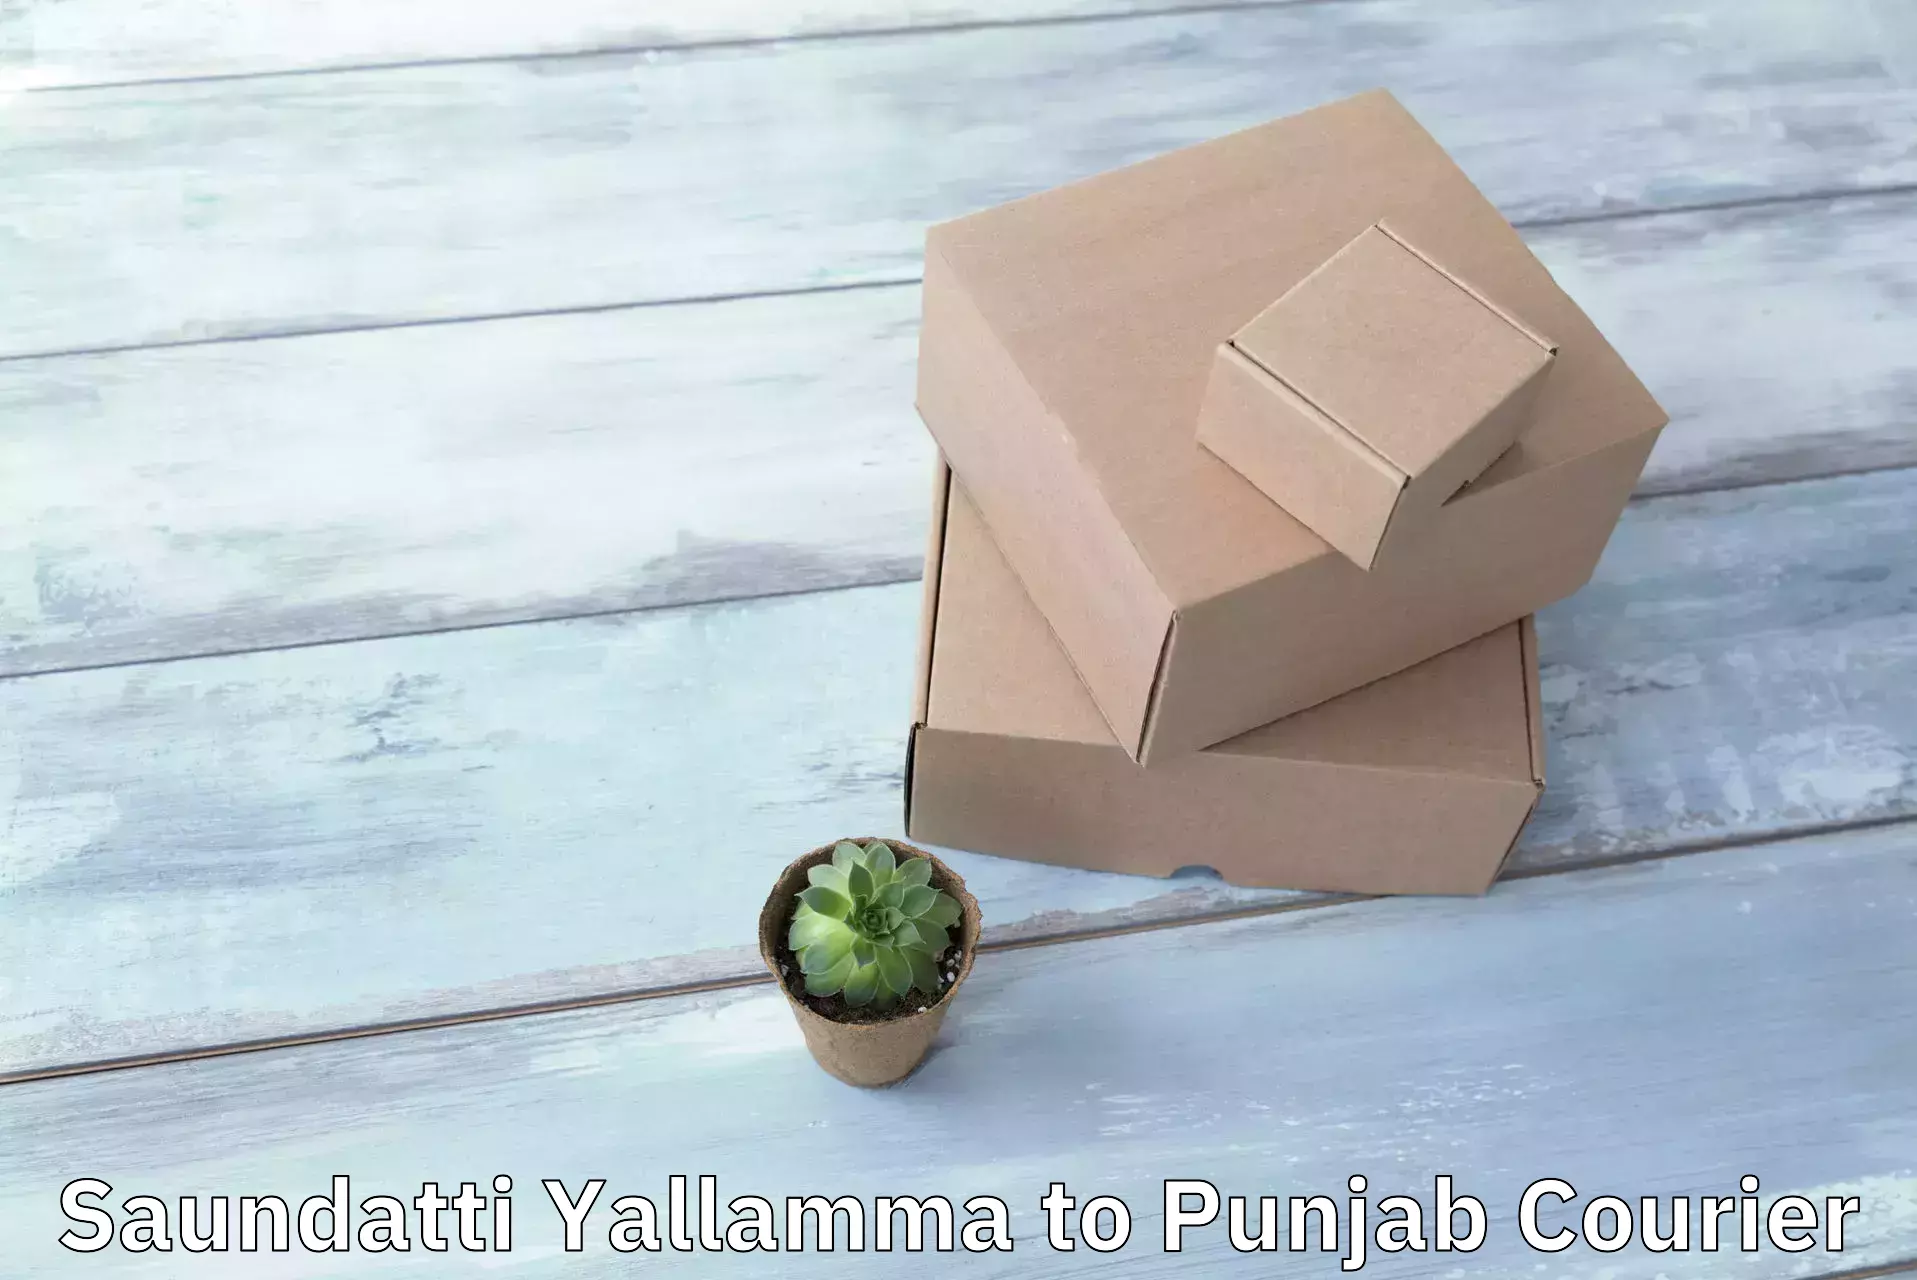 Efficient parcel service Saundatti Yallamma to Nawanshahr